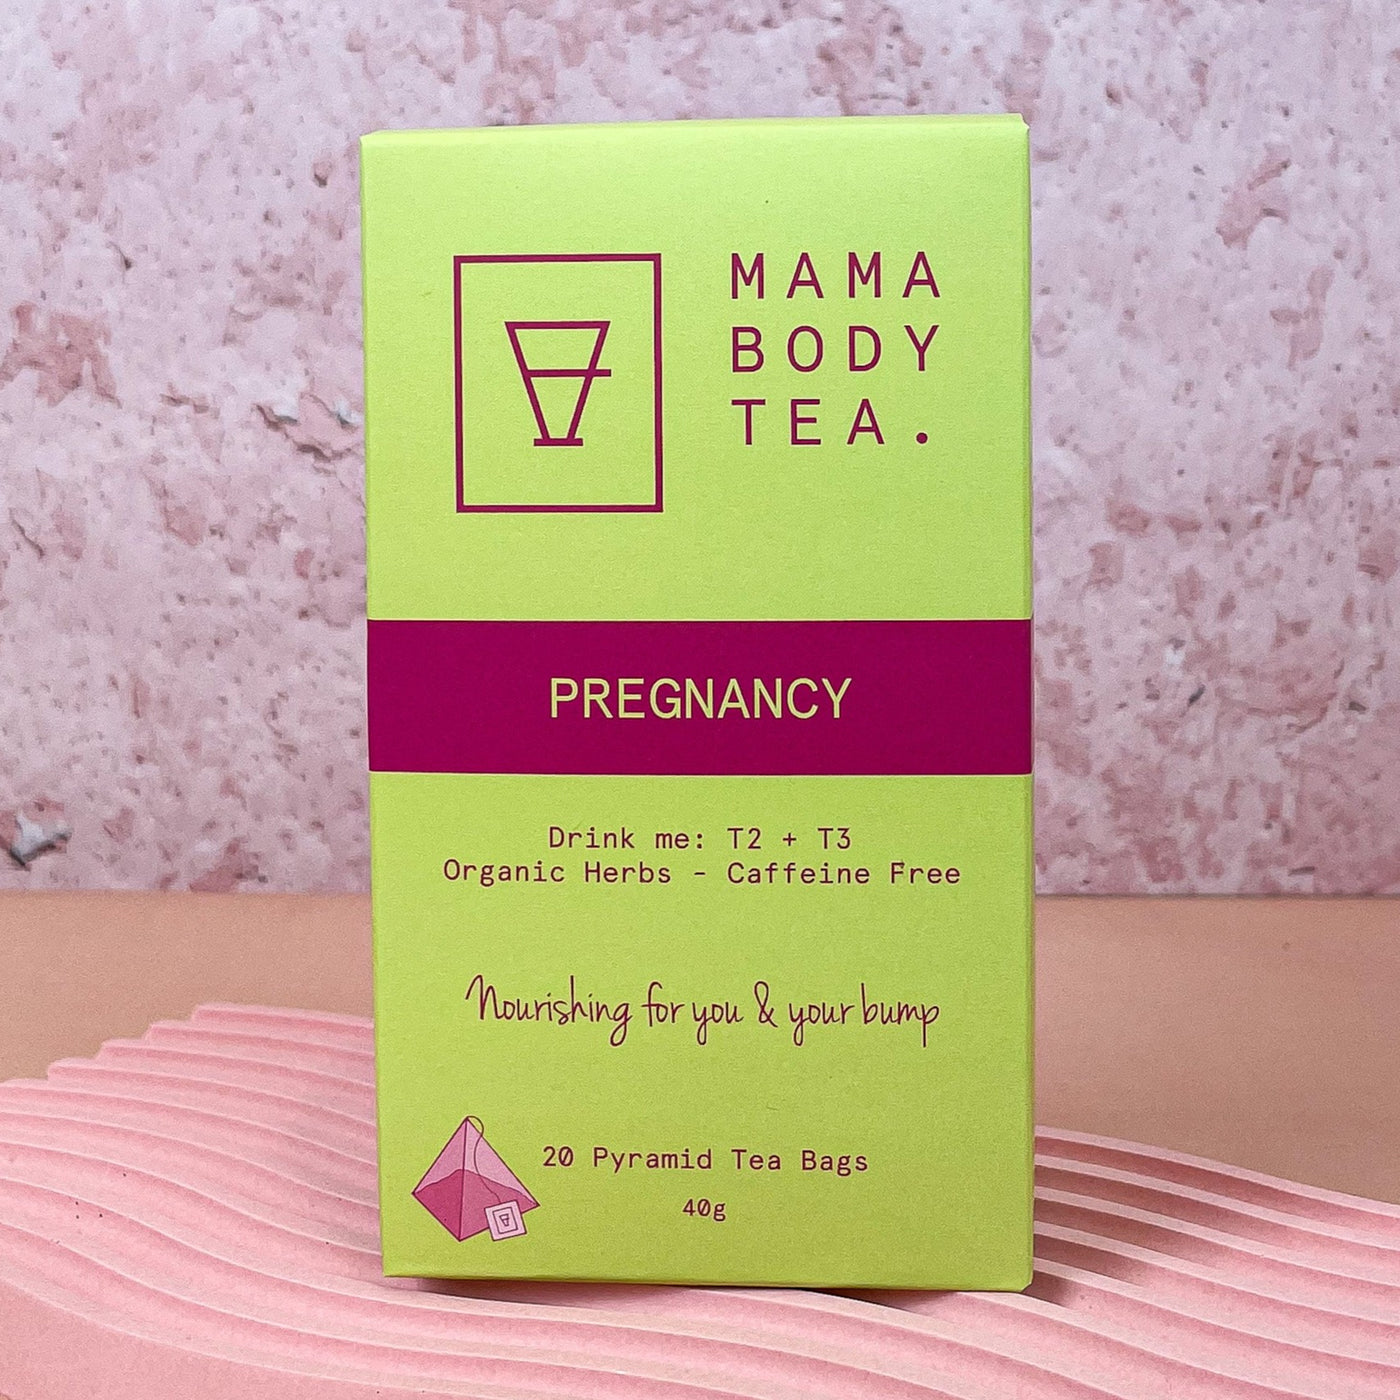 Pregnancy Tea - Mama Body Tea